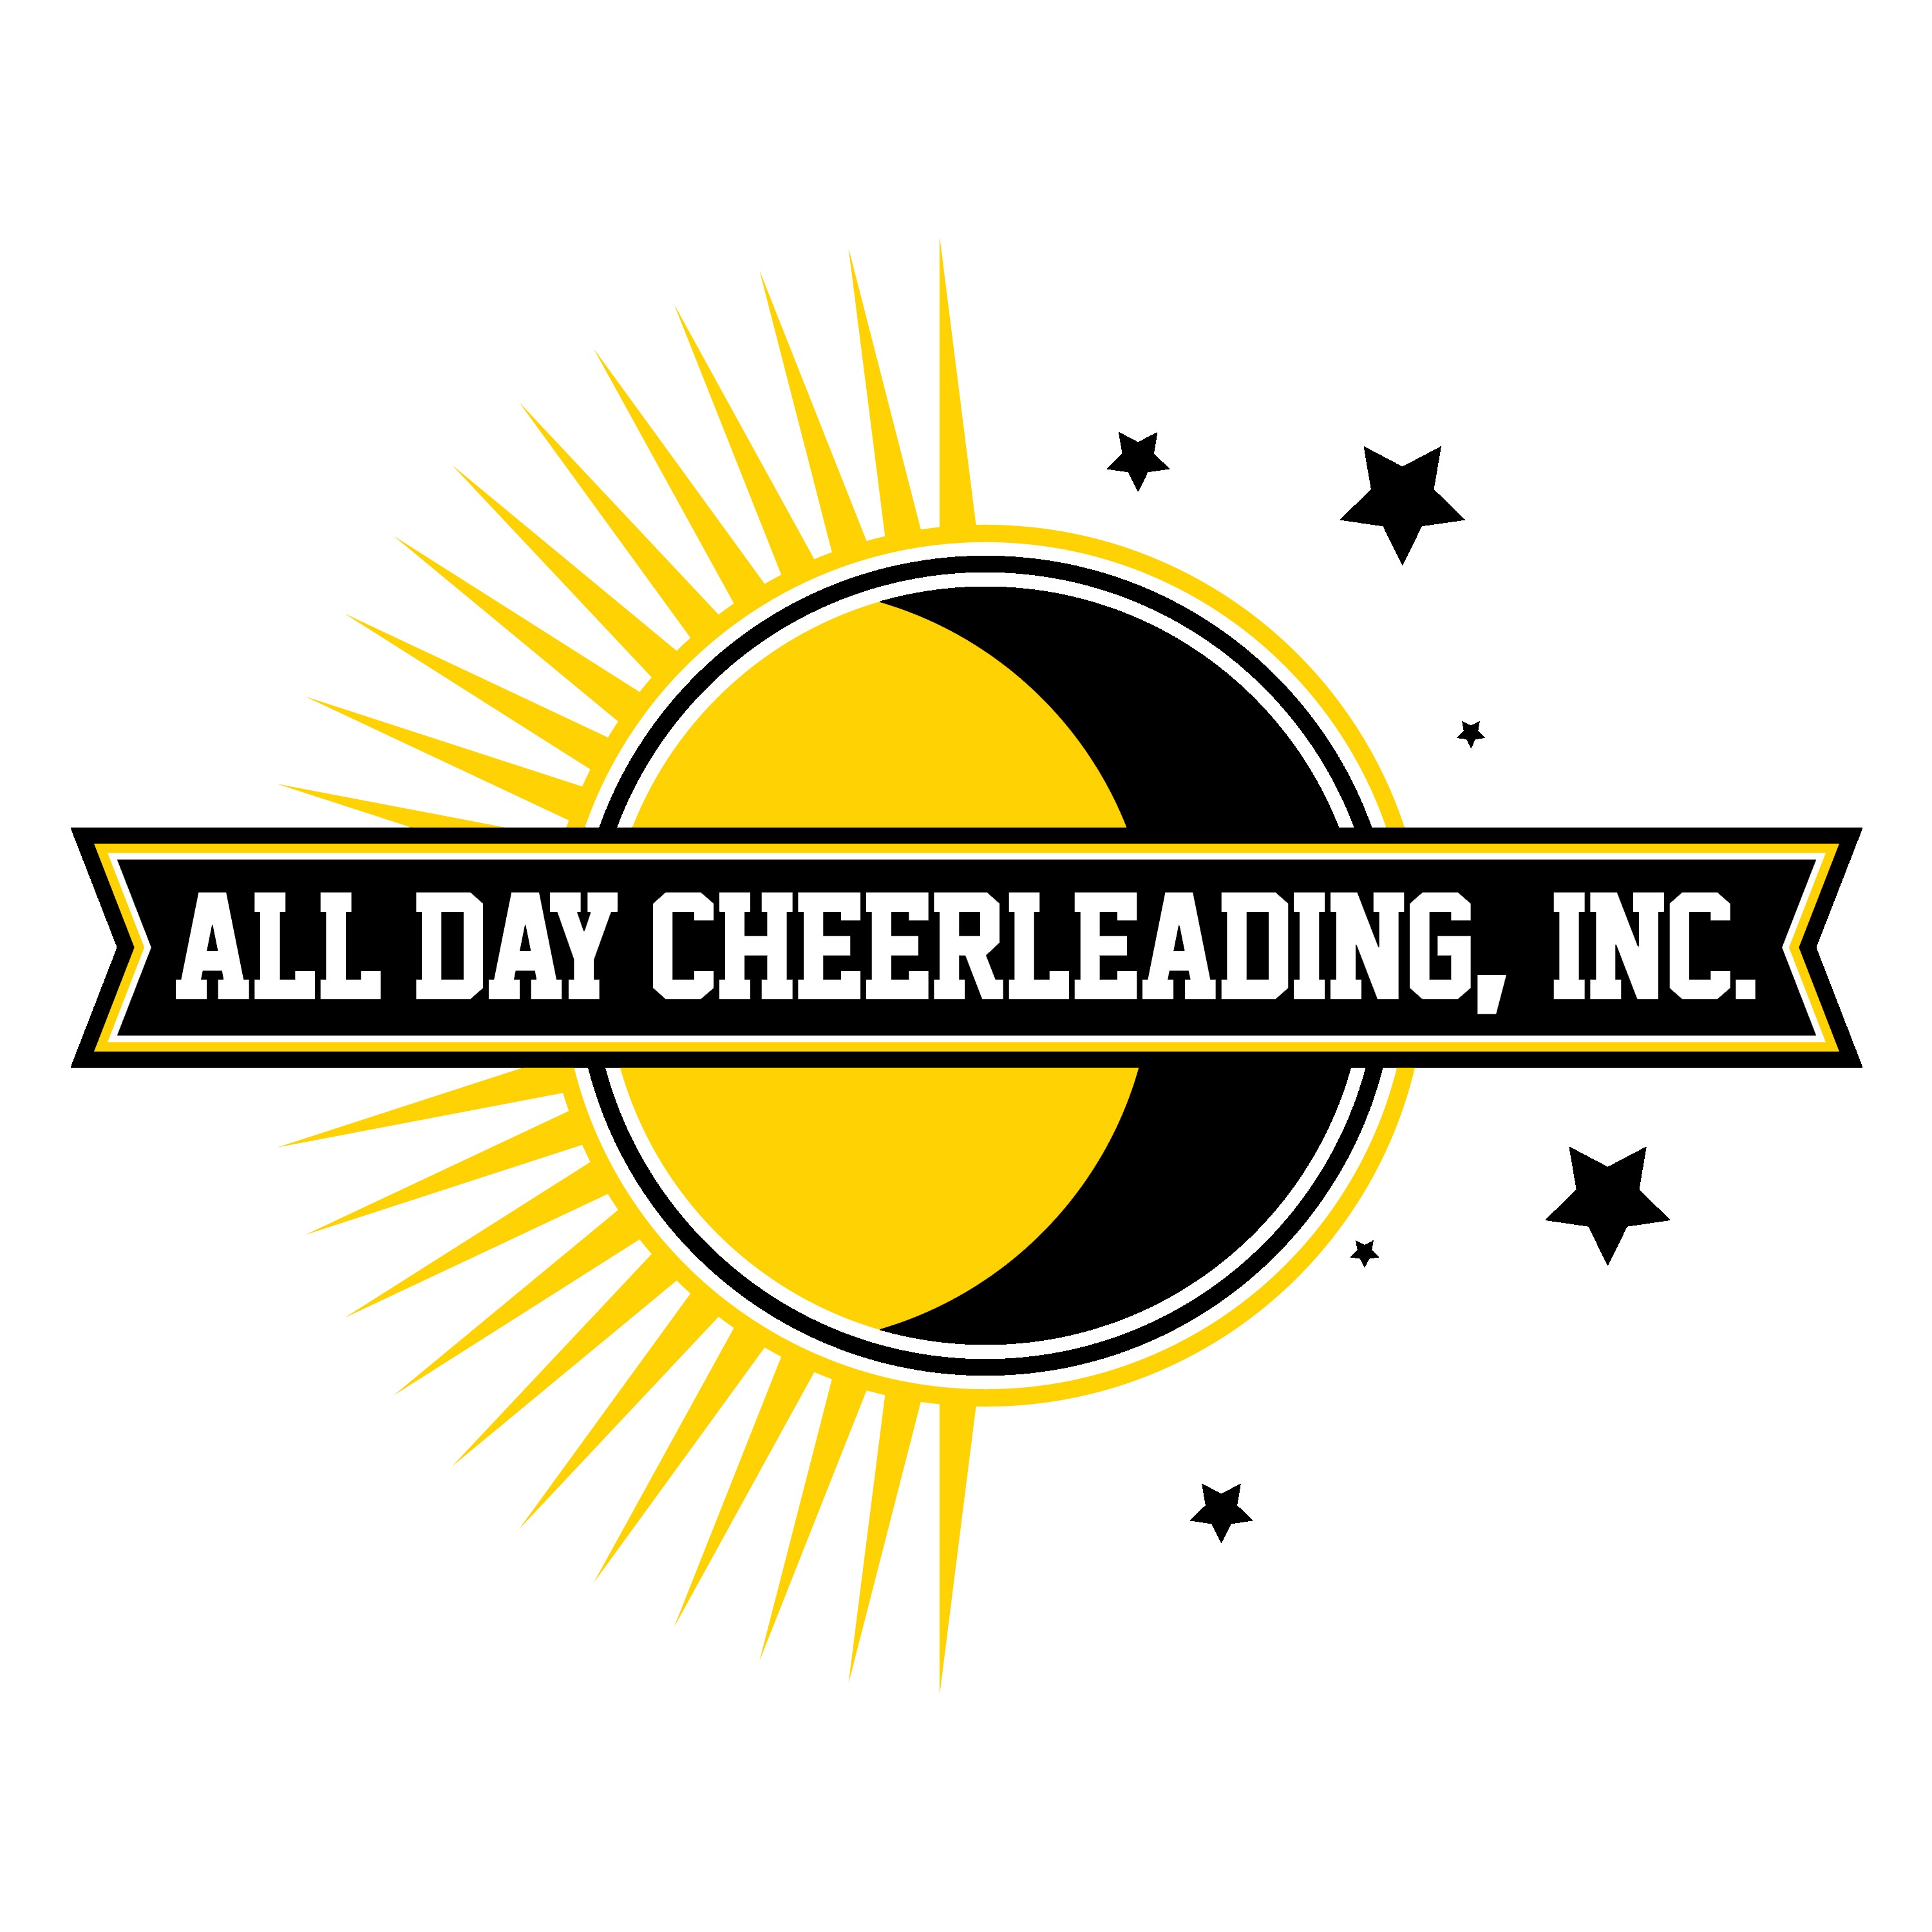 All Day Cheerleading, Inc